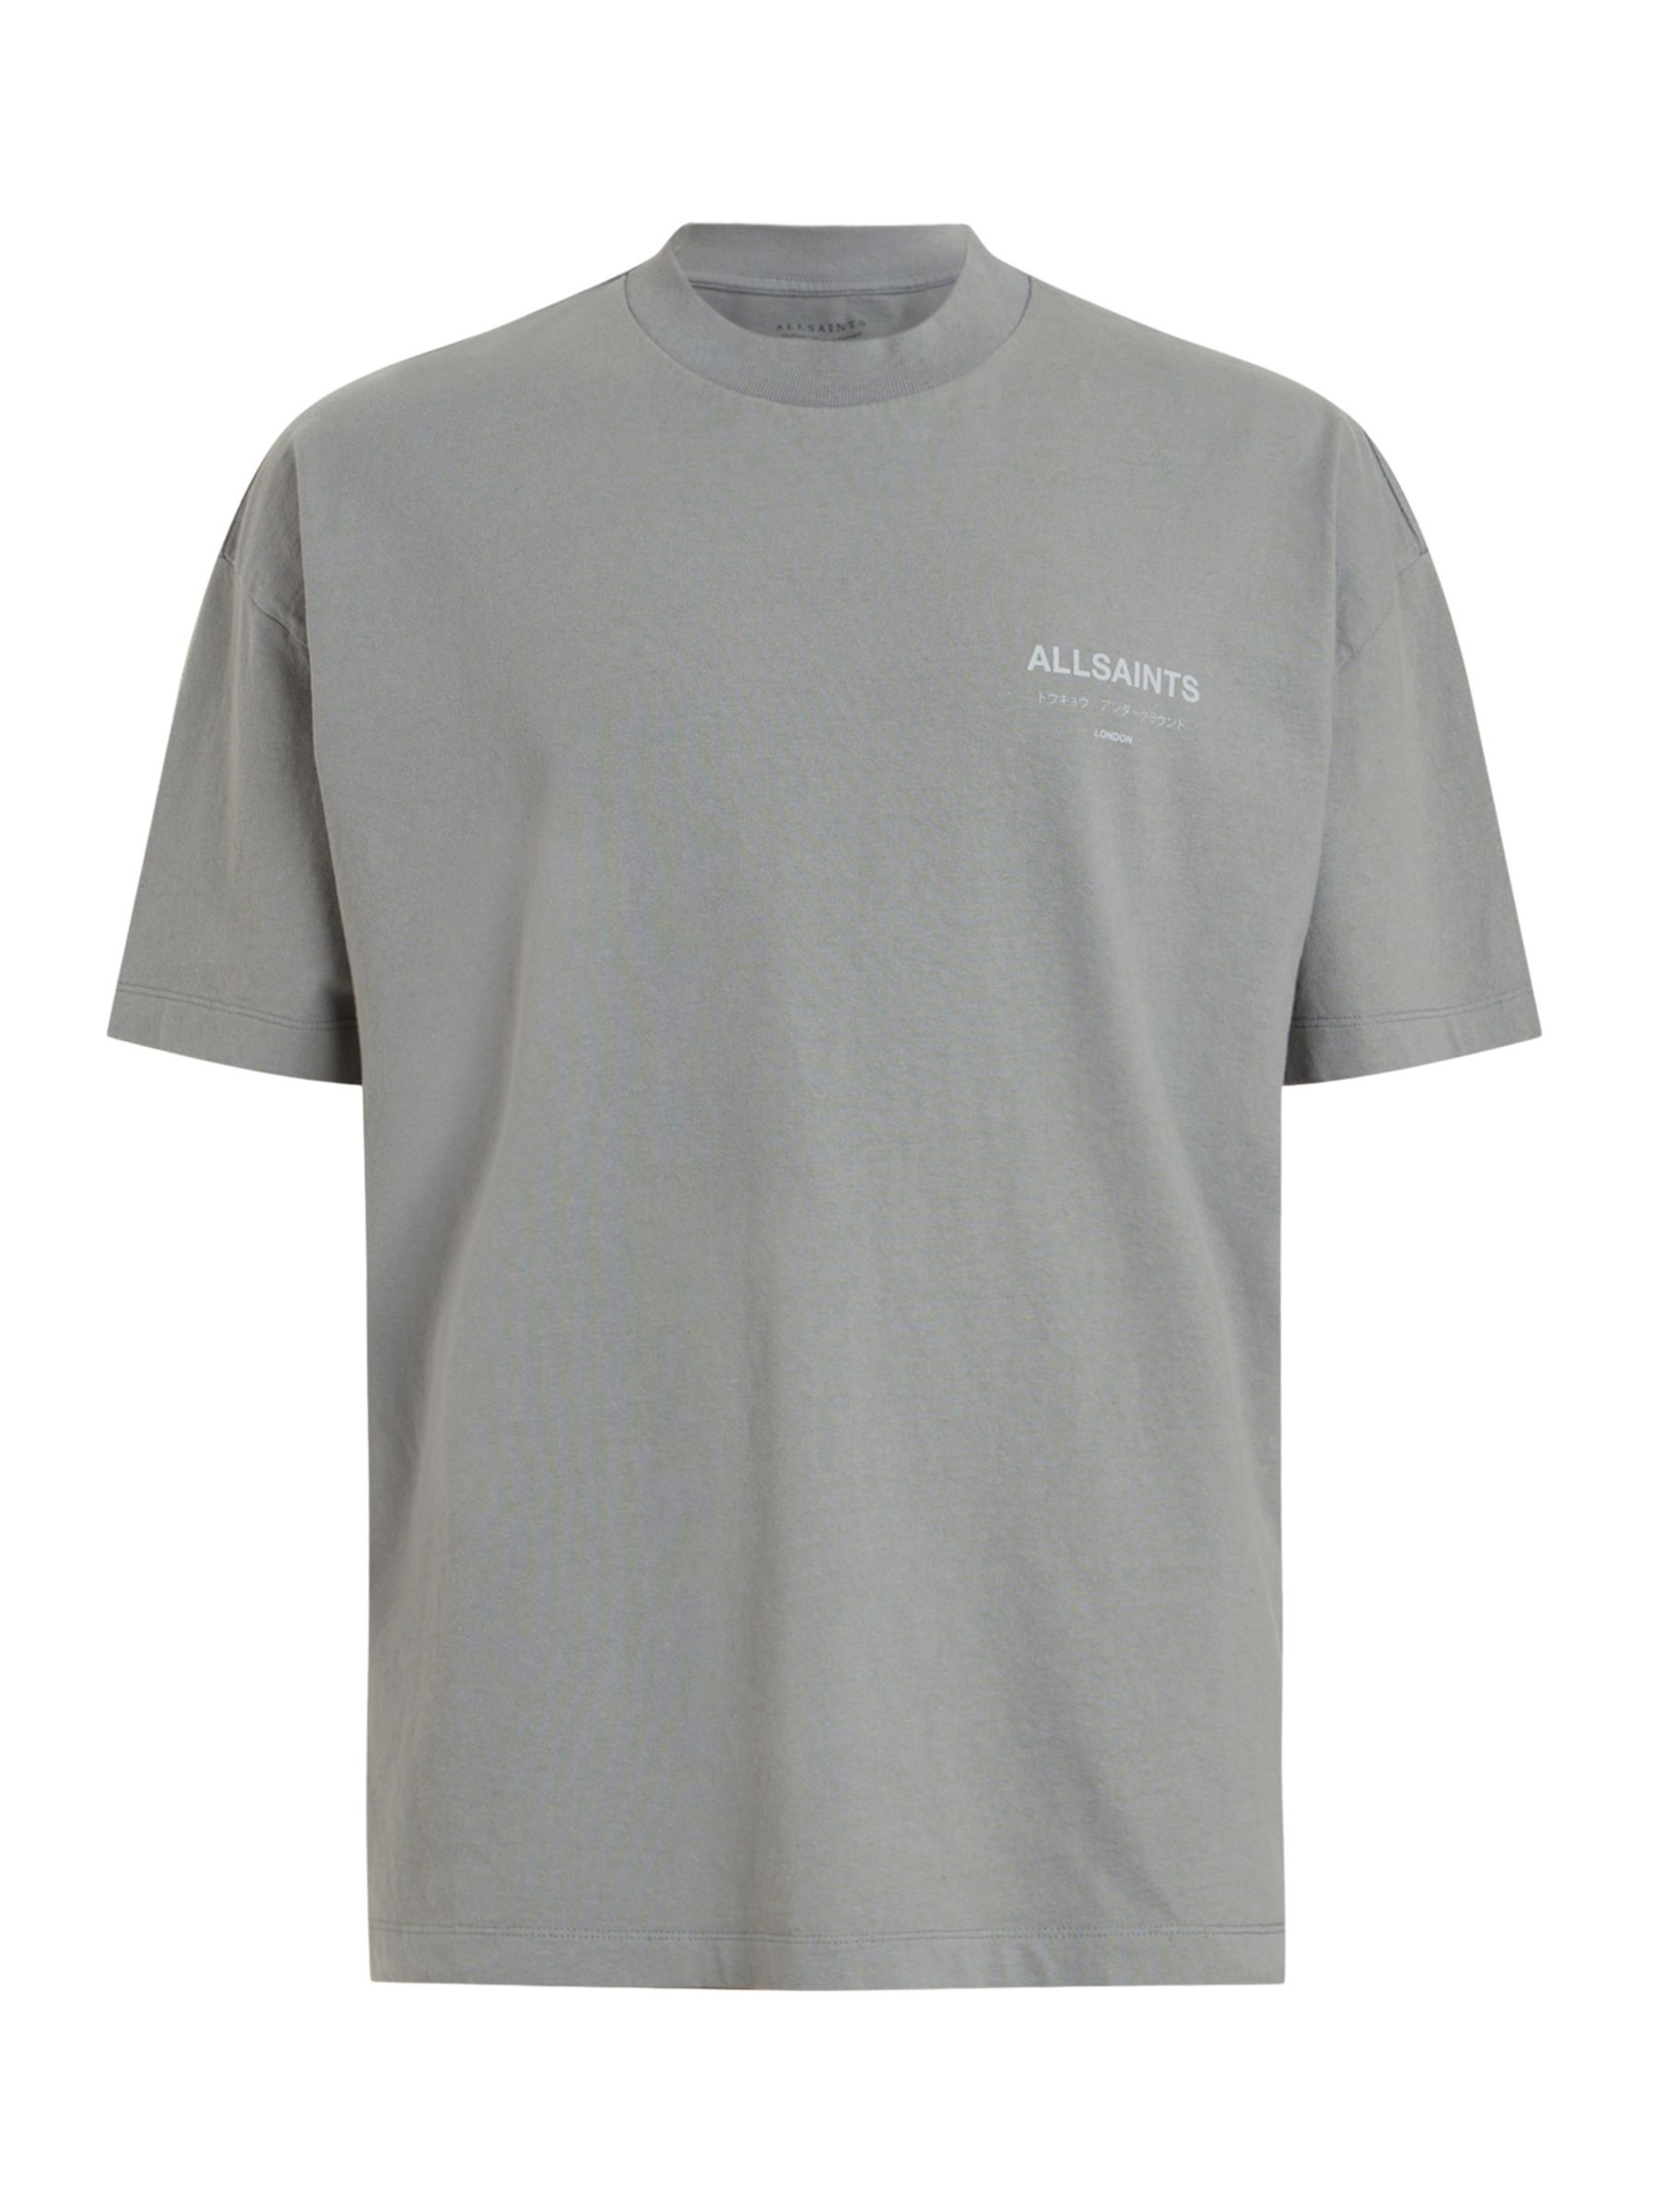 AllSaints Underground T-Shirt, Metallic Grey at John Lewis & Partners